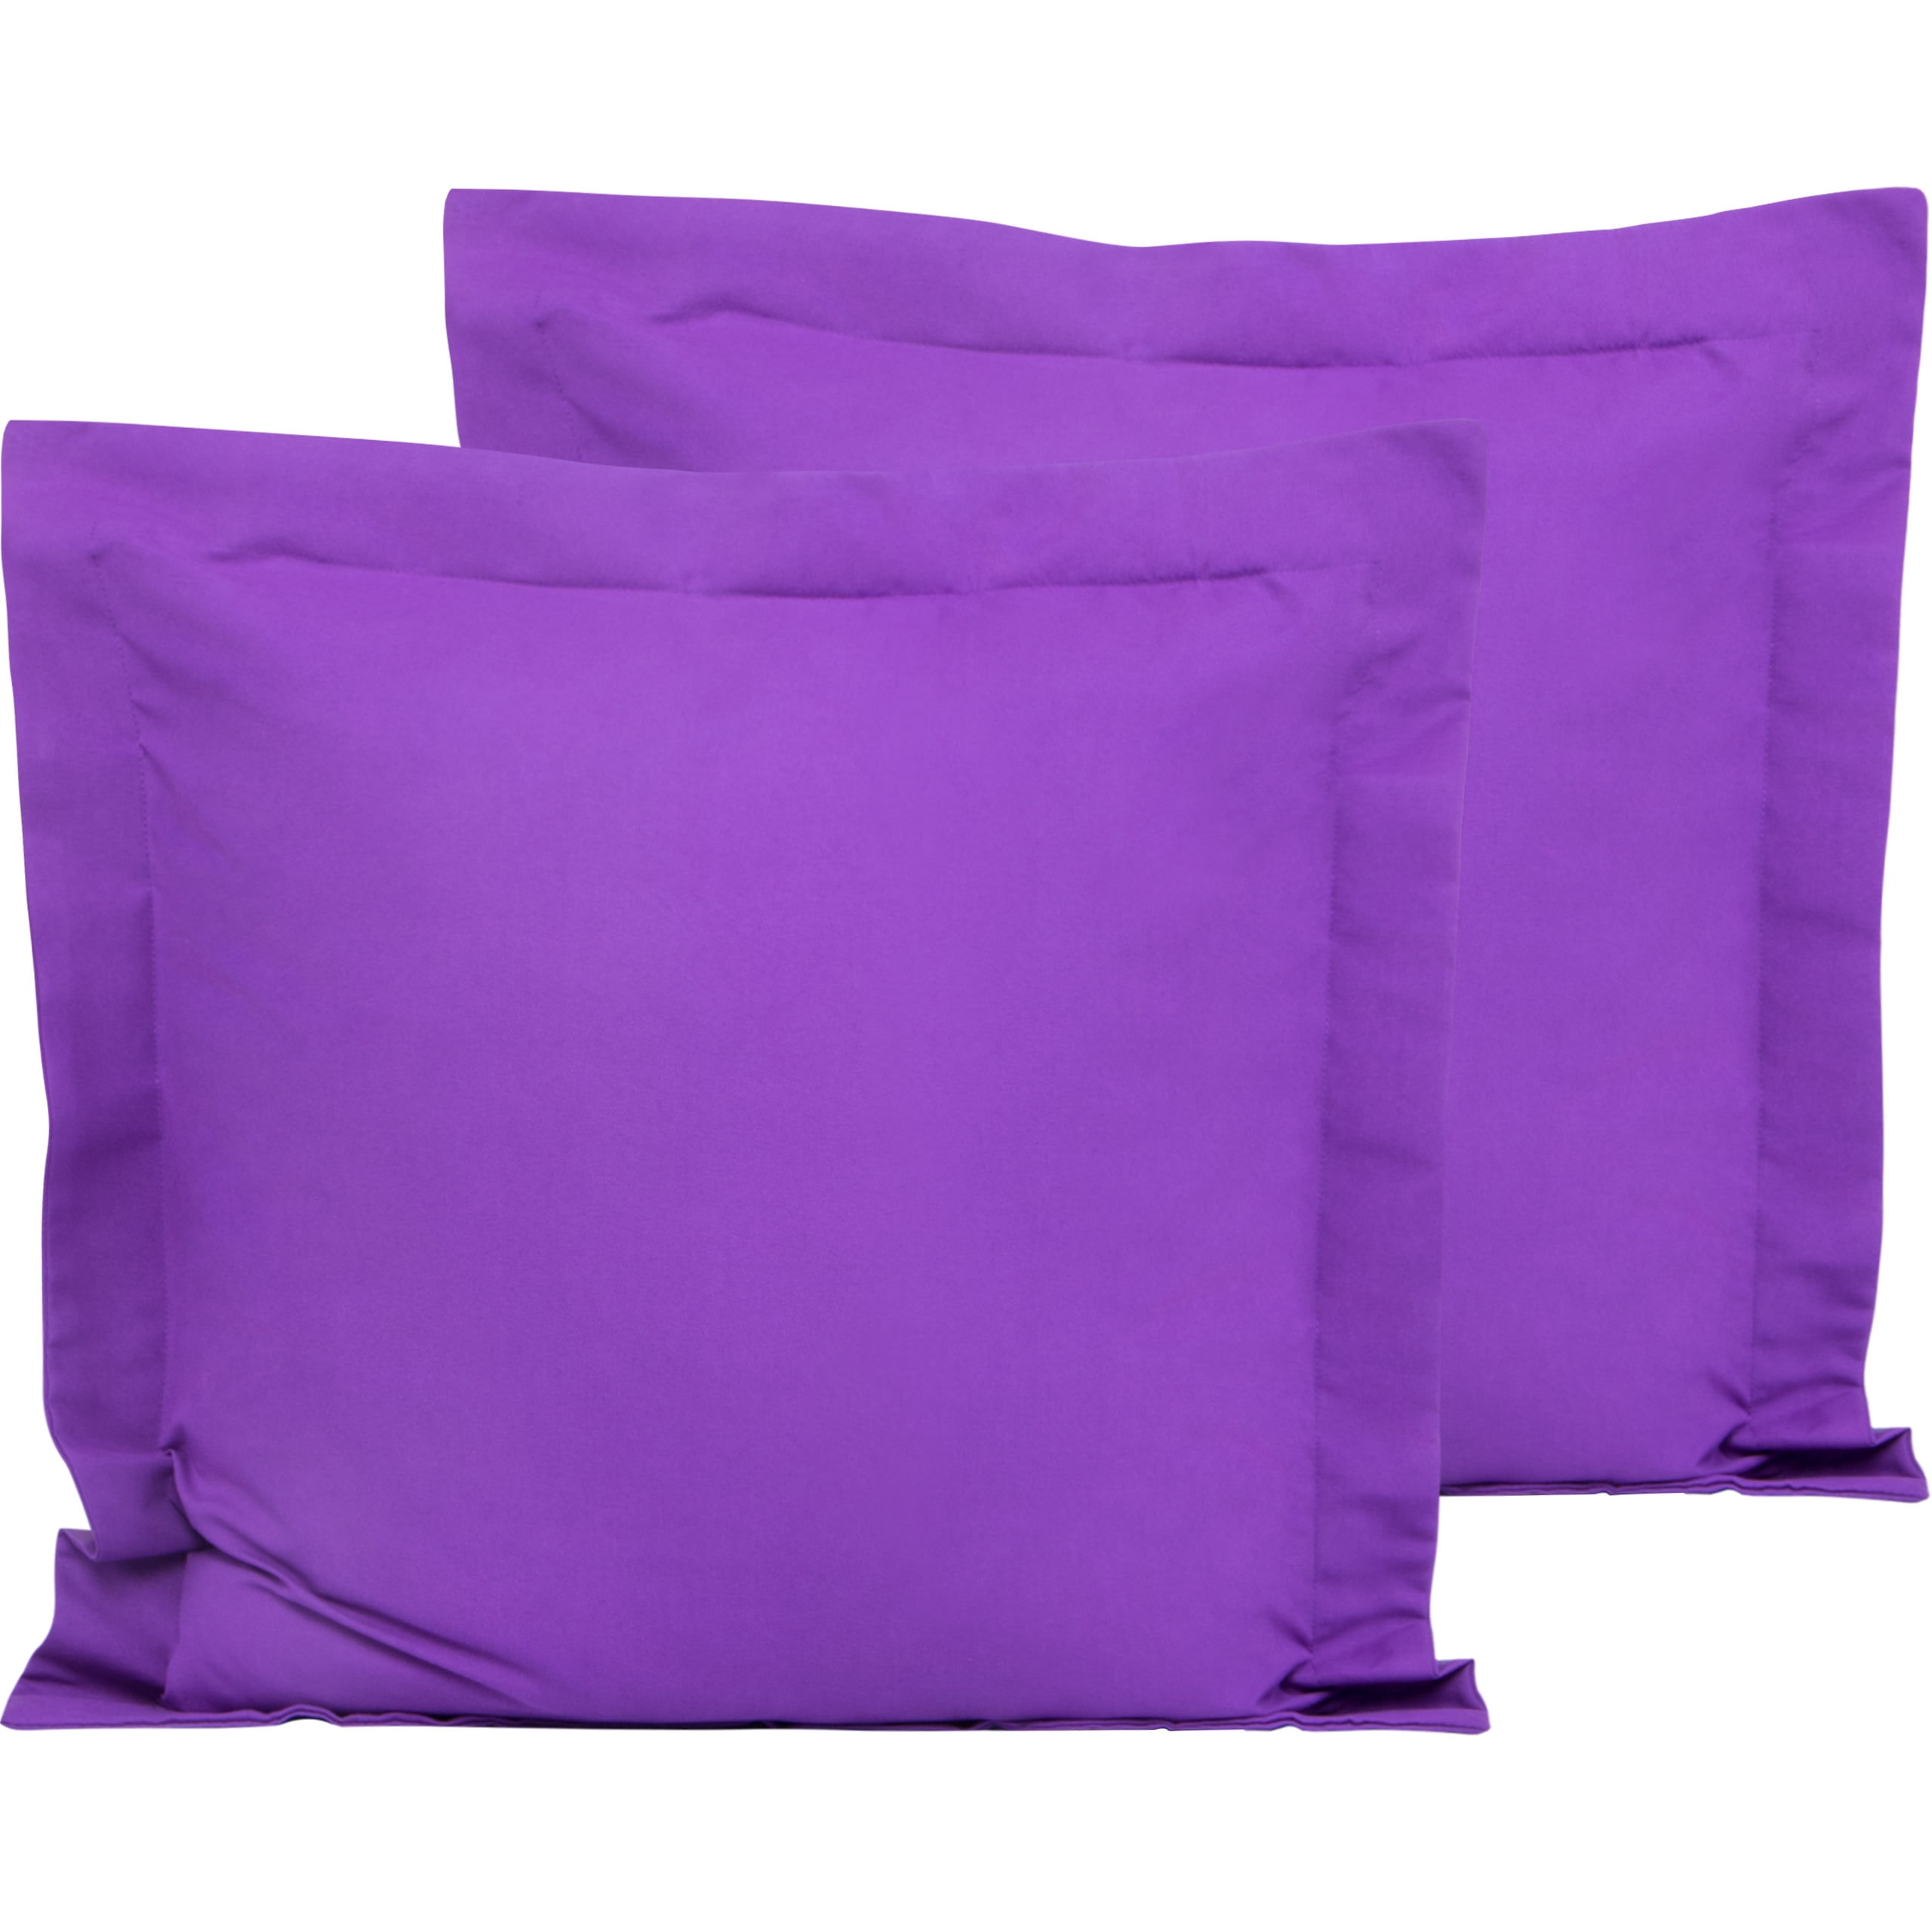 Flxxie 2 Pack Microfiber Euro Pillow Shams Ultra Soft European Throw Pillow Covers Decorative